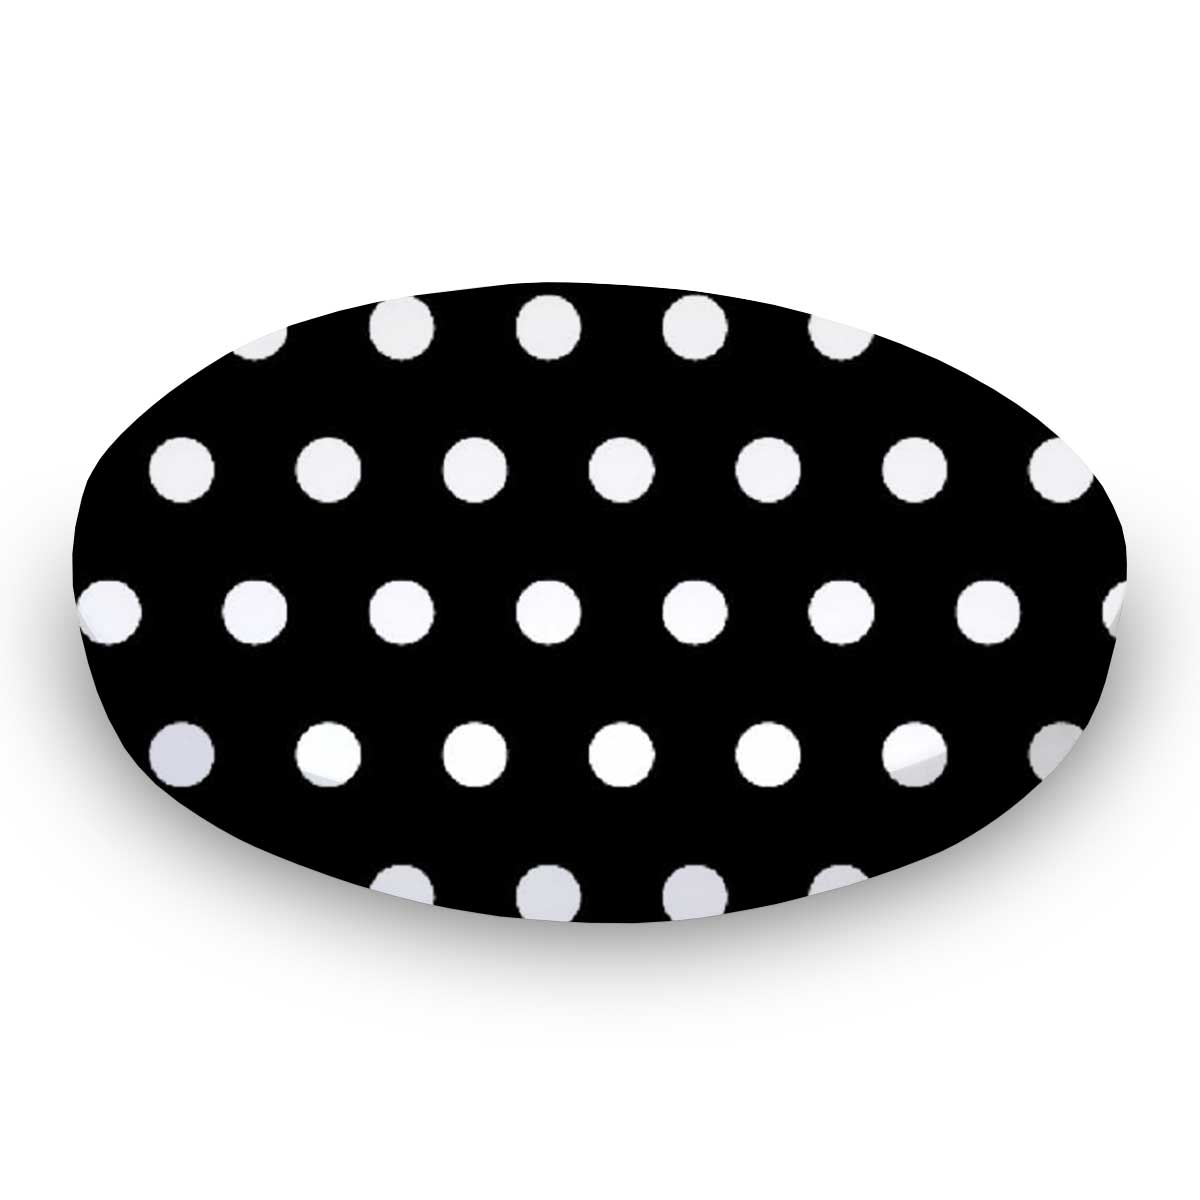 Oval Crib (Stokke Sleepi) - Polka Dots Black - Fitted  Oval